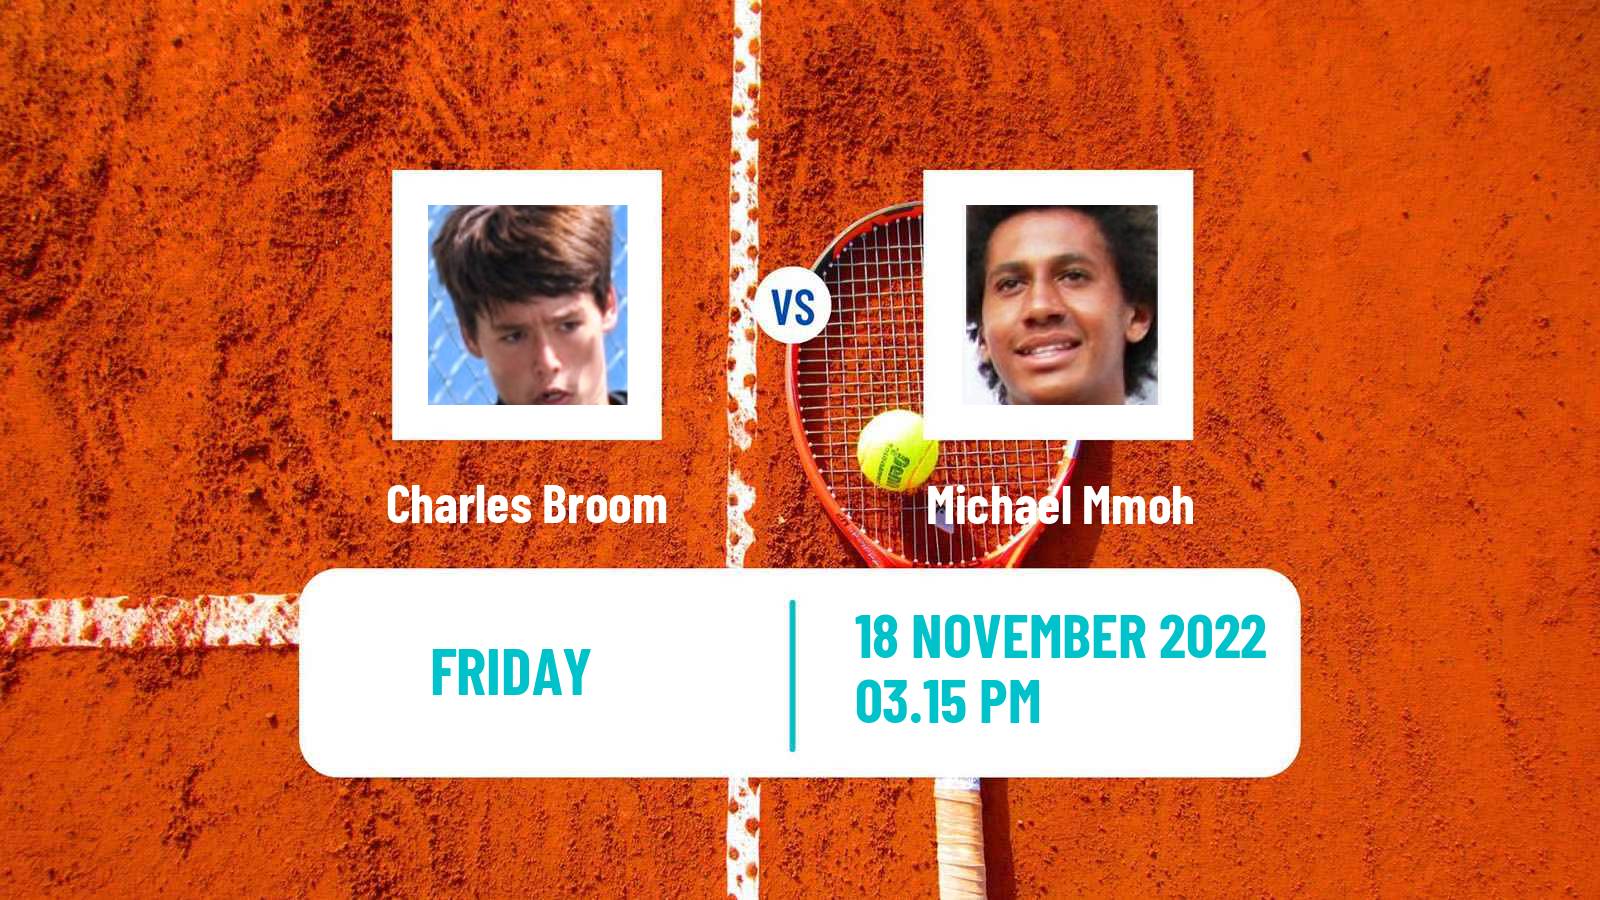 Tennis ATP Challenger Charles Broom - Michael Mmoh